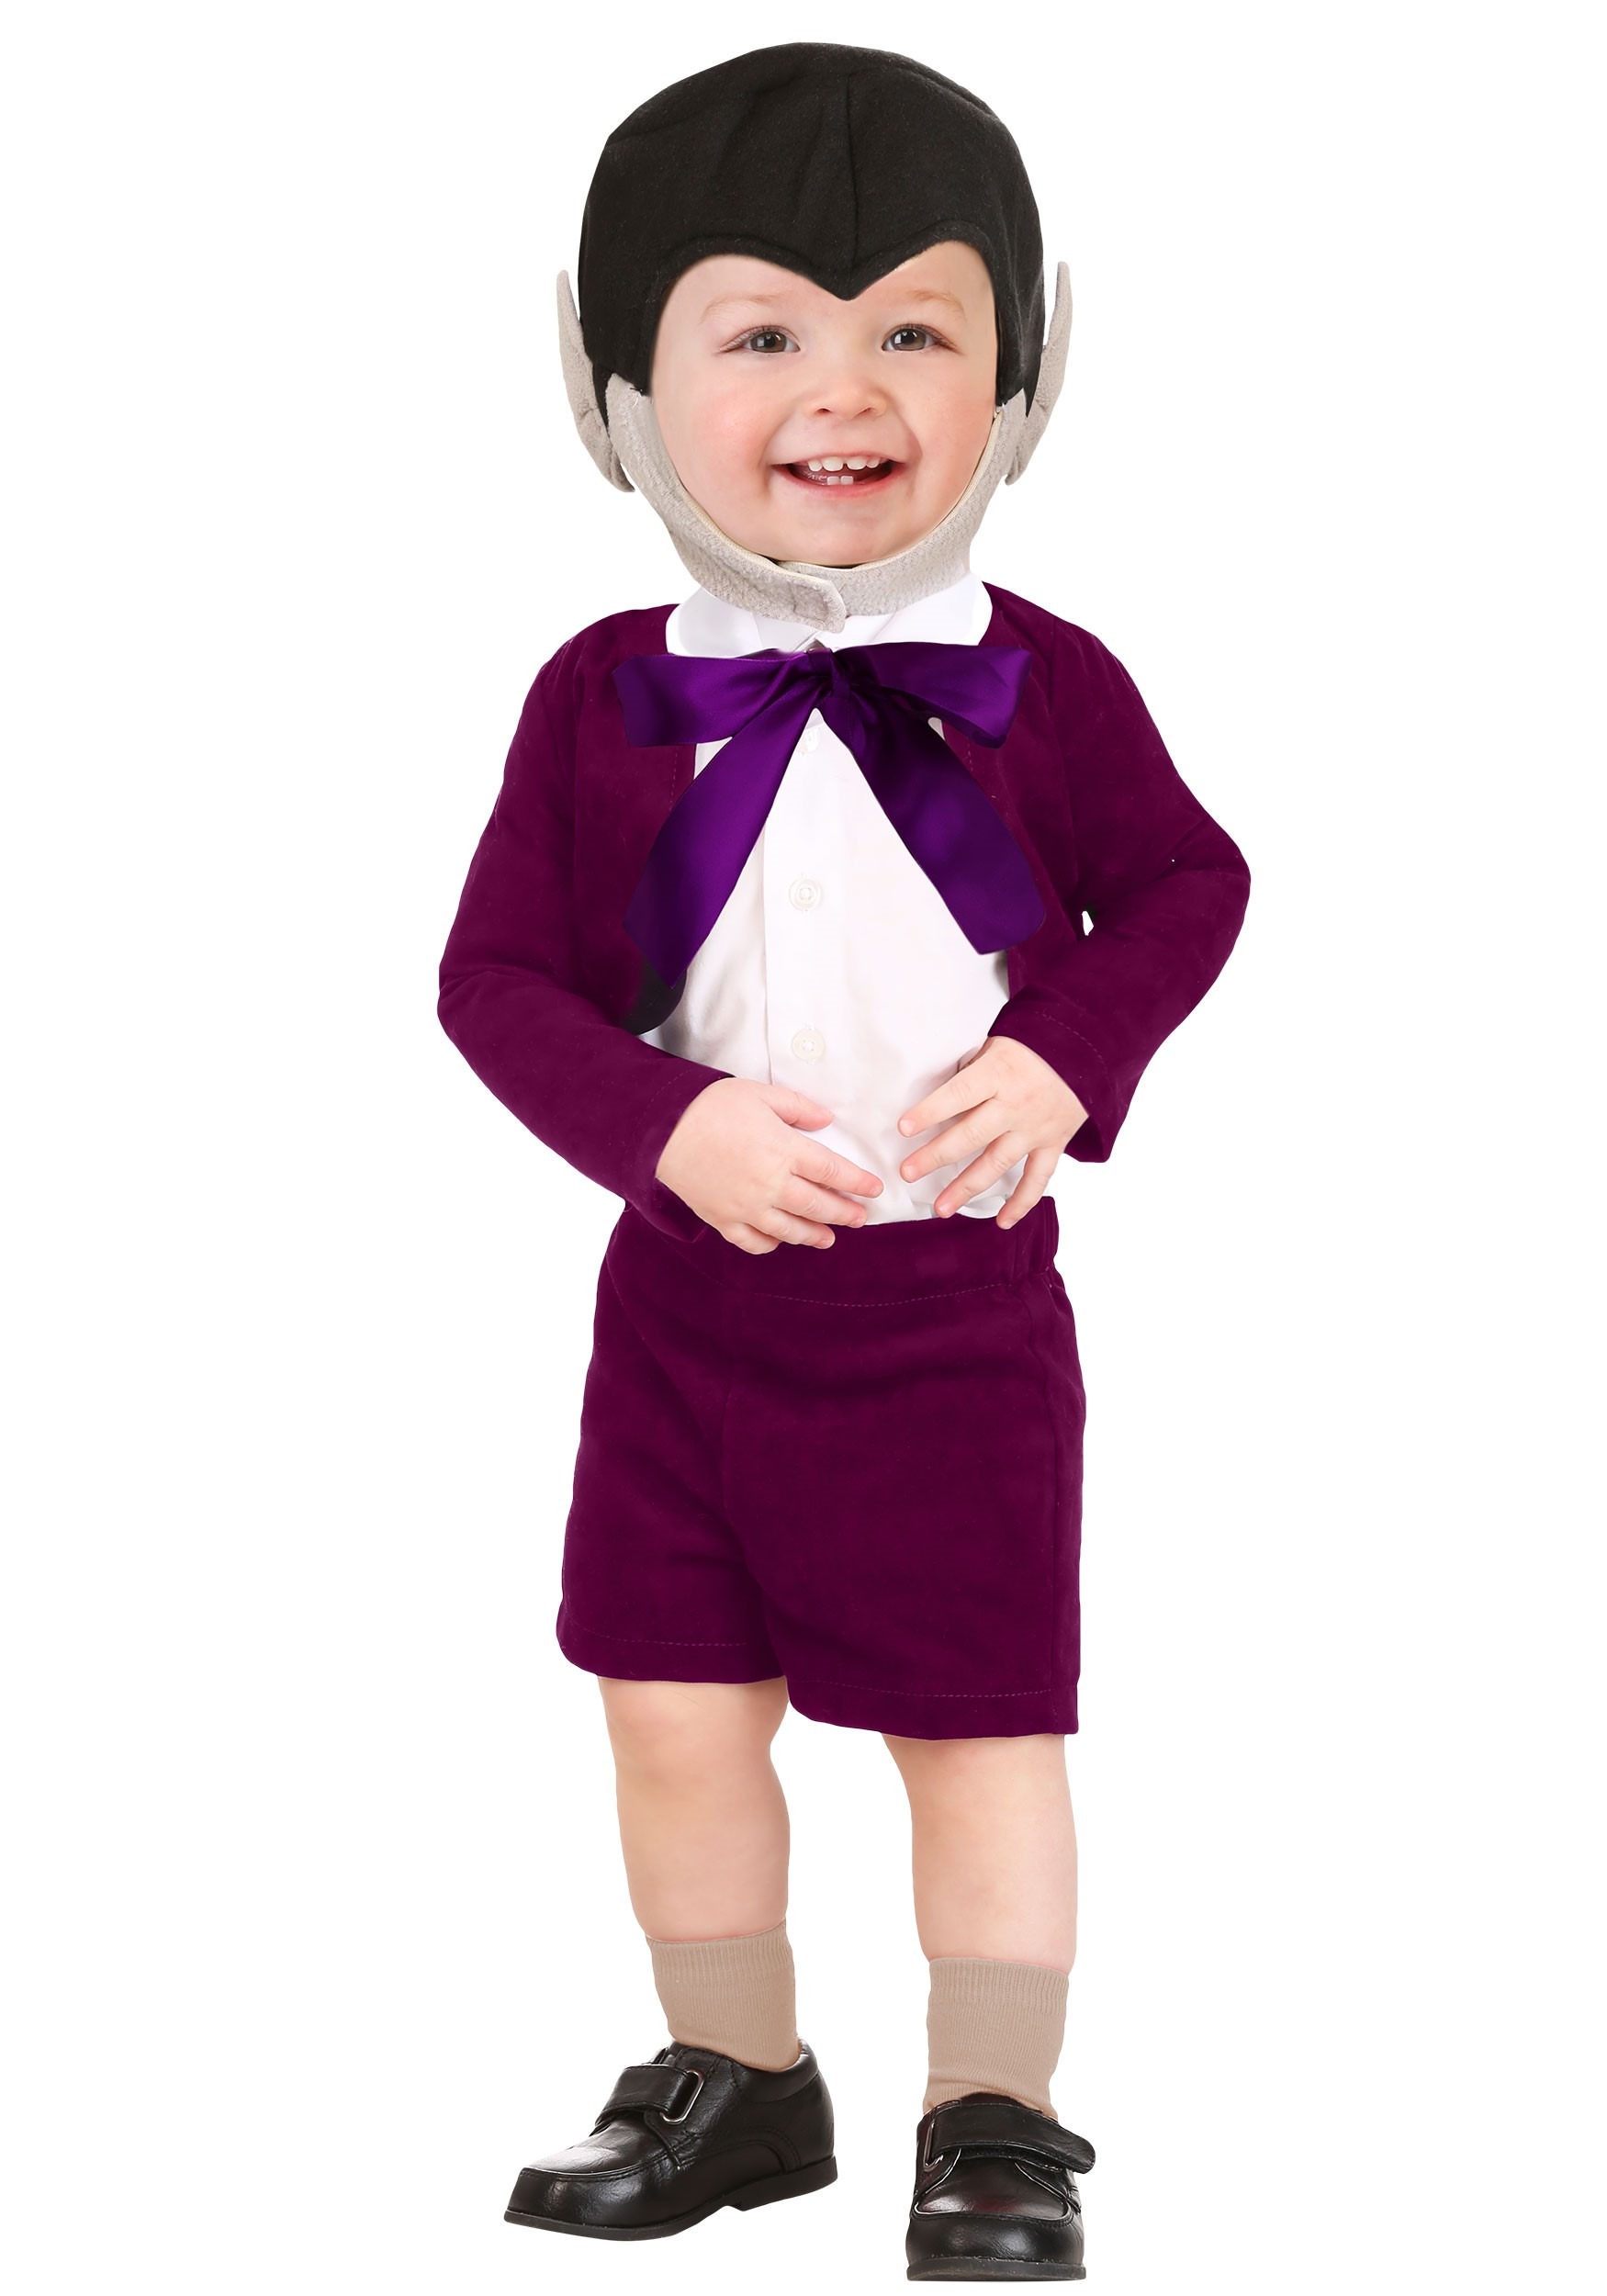 Photos - Fancy Dress FUN Costumes Eddie The Munsters Infant Costume Black/Purple/White